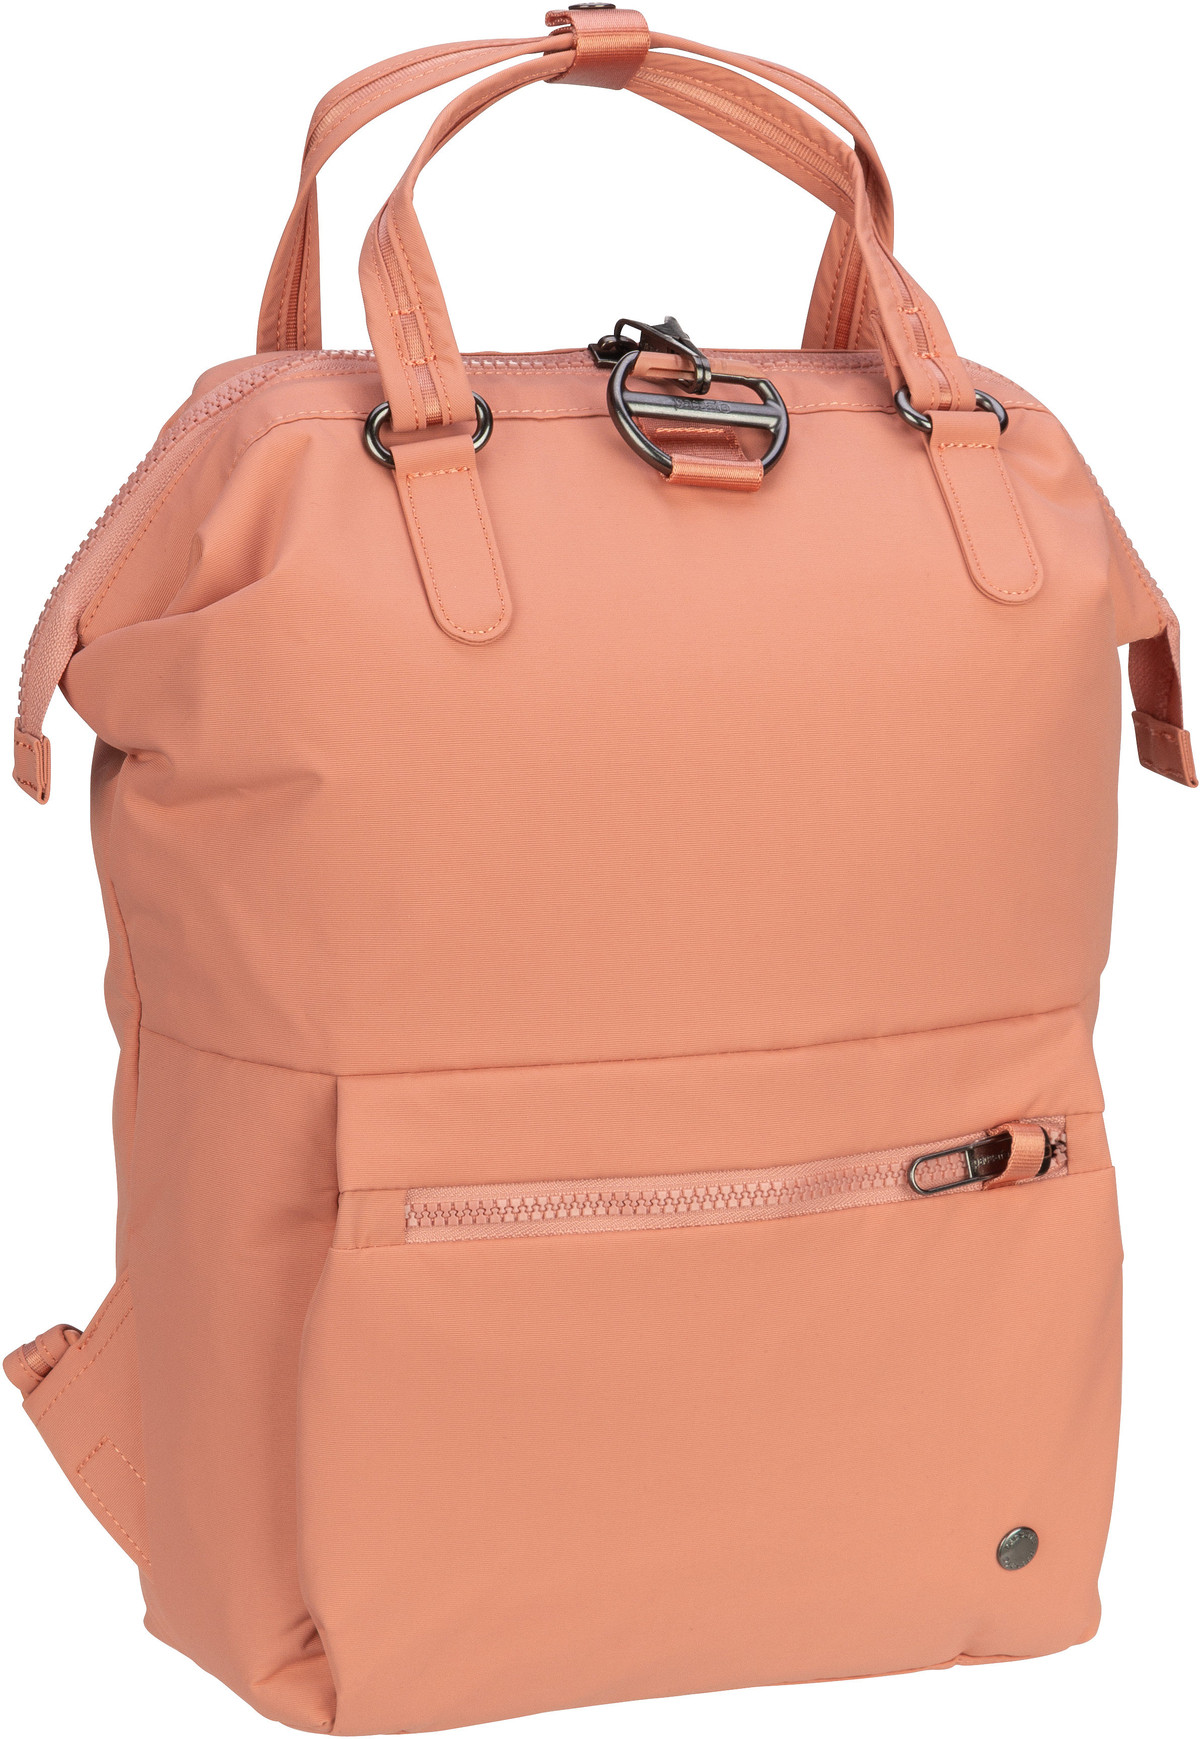 Pacsafe Pacsafe Citysafe CX Mini Backpack in Rosé (11 Liter), Rucksack / Backpack